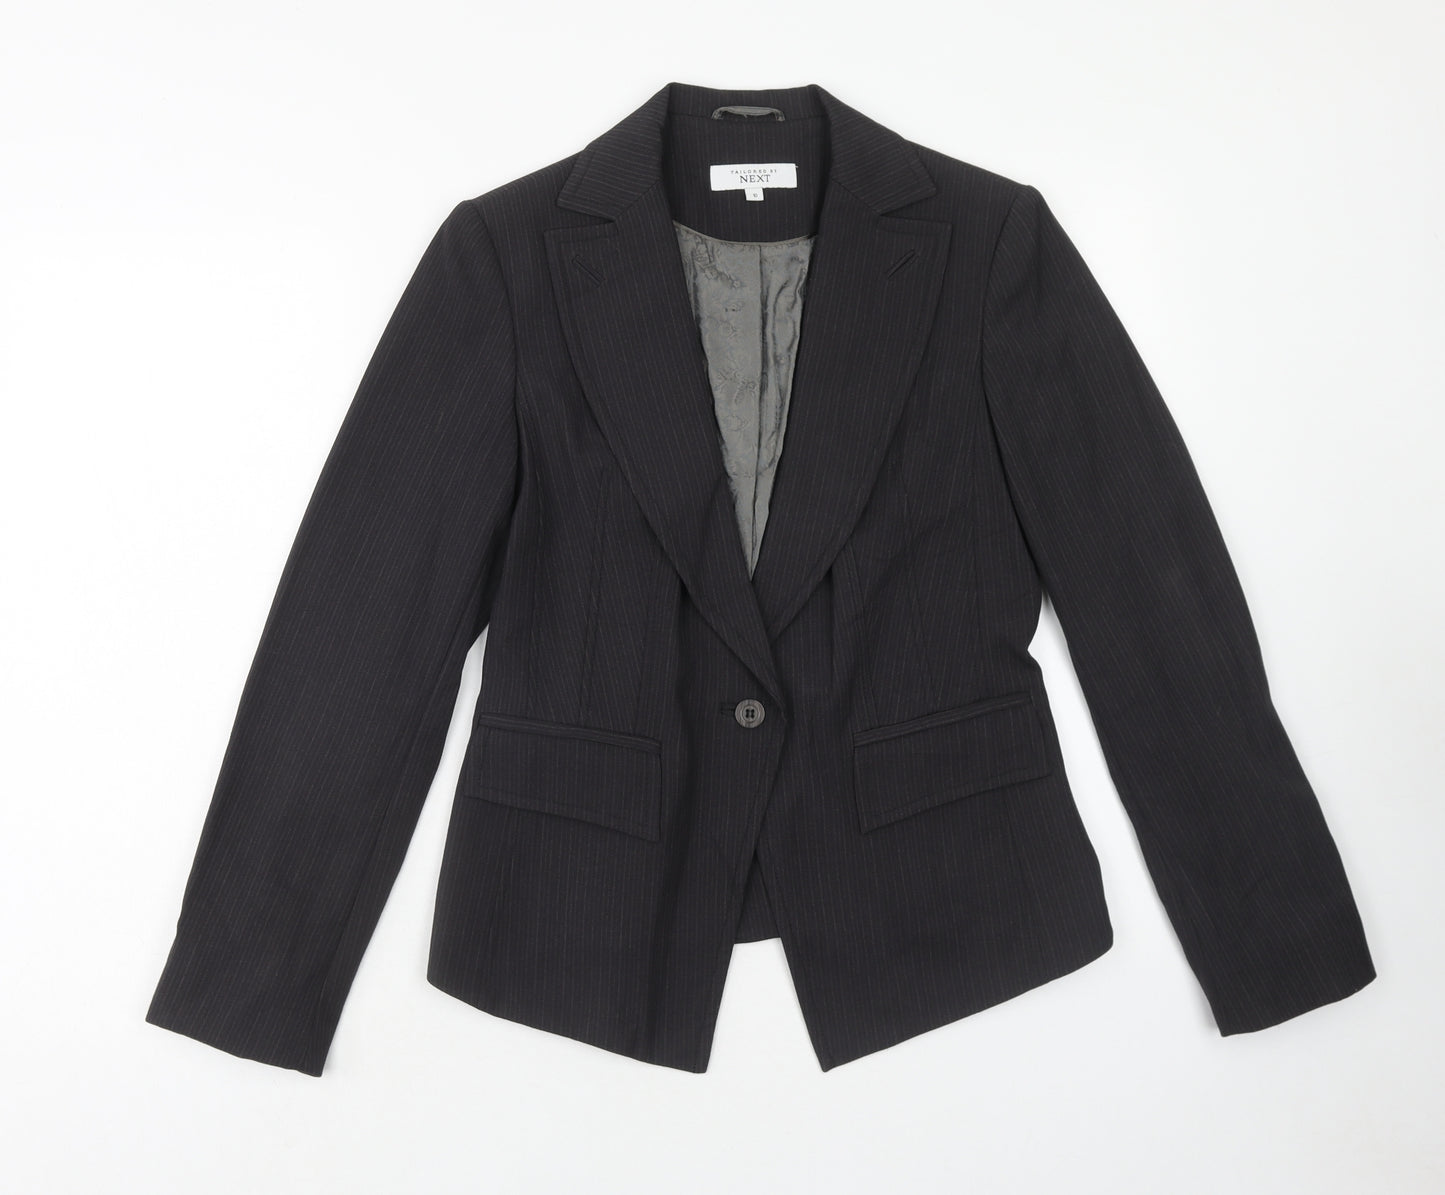 NEXT Womens Grey Pinstripe Polyester Jacket Suit Jacket Size 10 Button